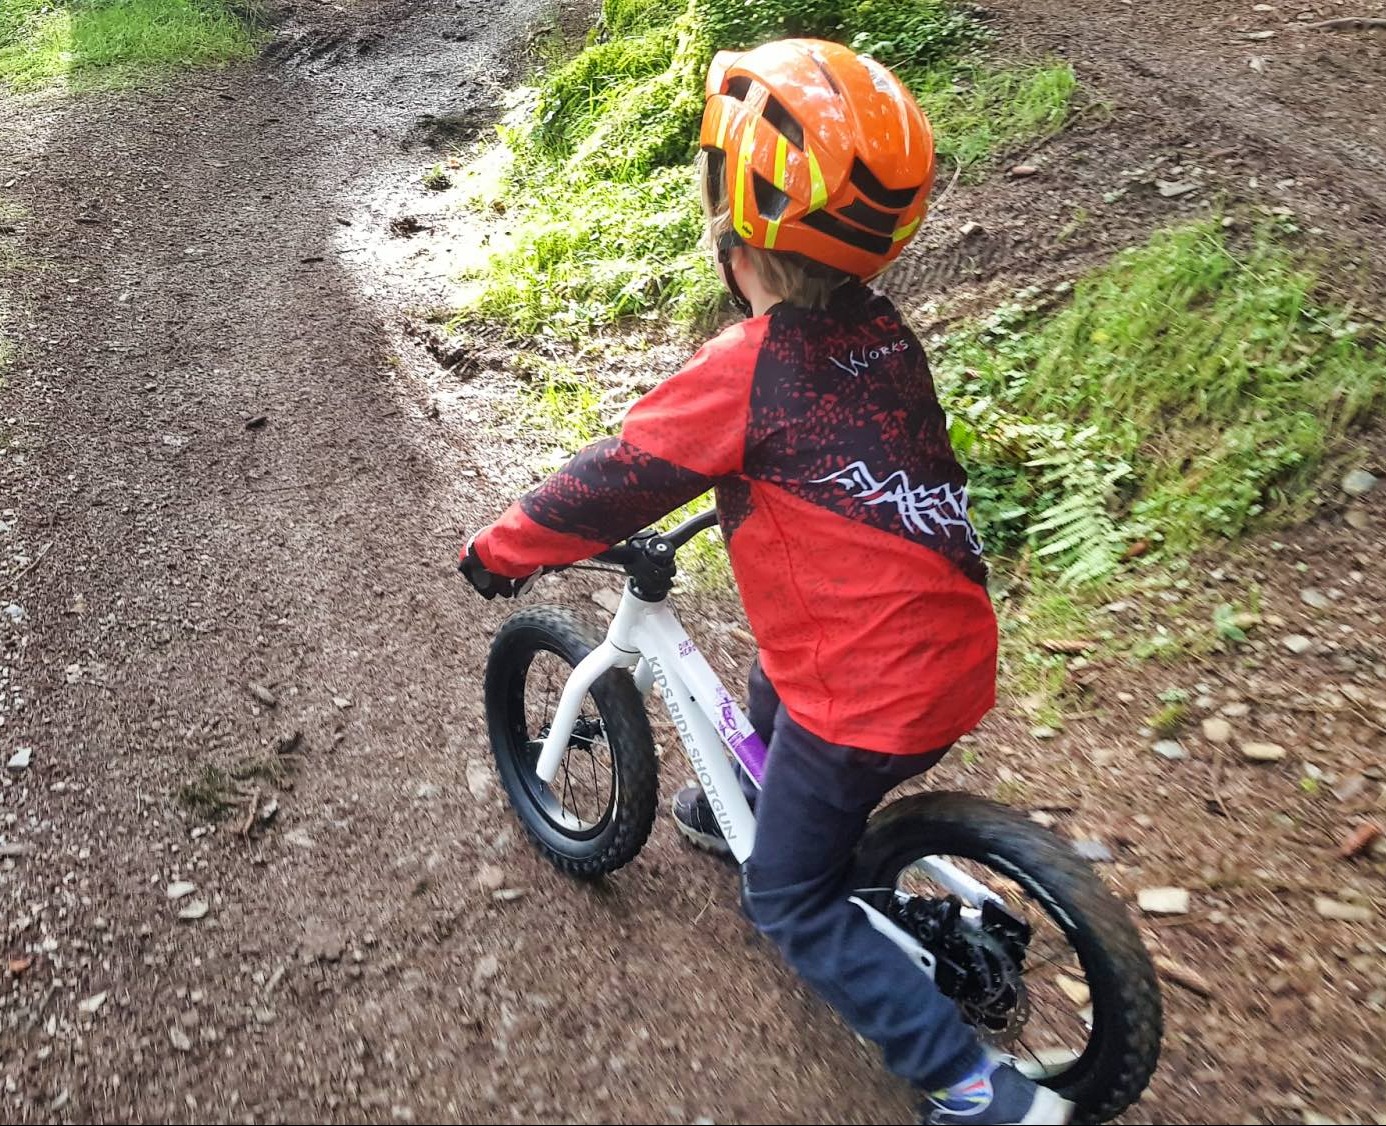 Boy on the Dirt Hero balance bike on a muddy trail